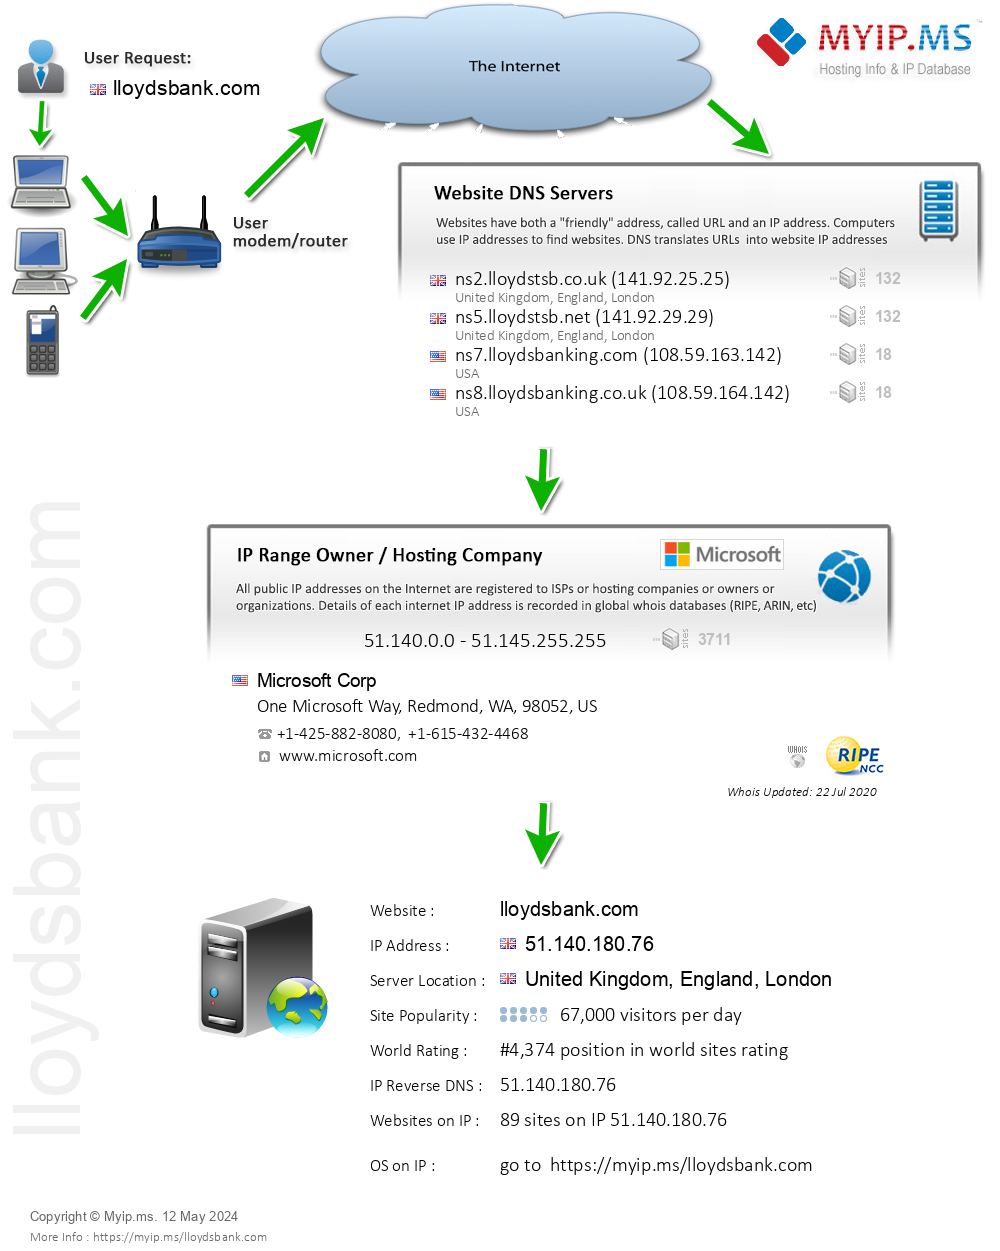 Lloydsbank.com - Website Hosting Visual IP Diagram